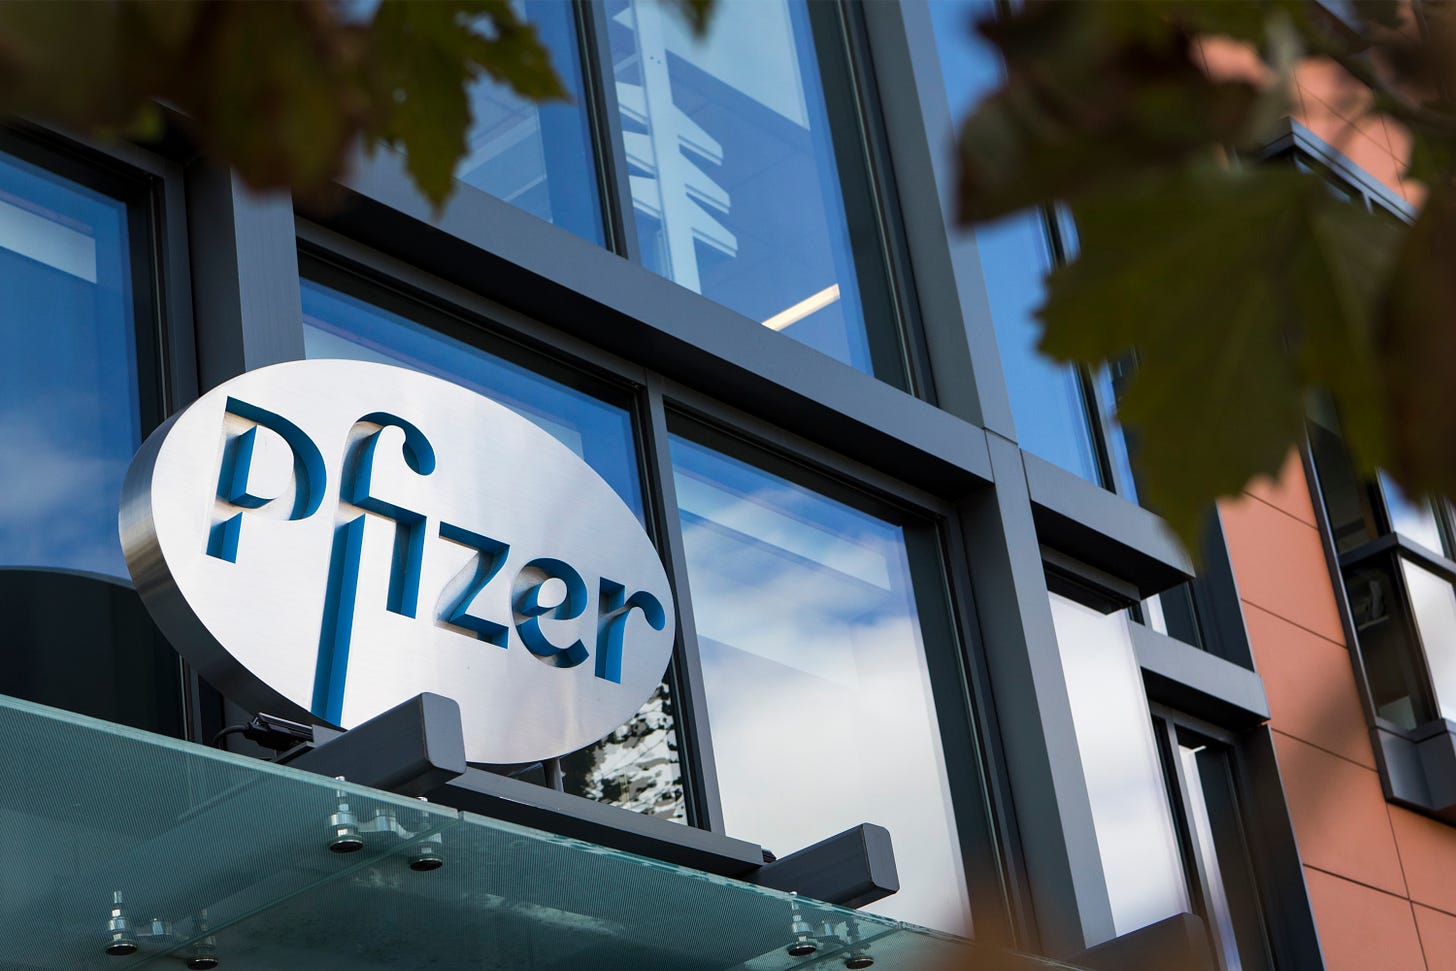 Pfizer won't seek Covid-19 vaccine approval before mid-November - STAT